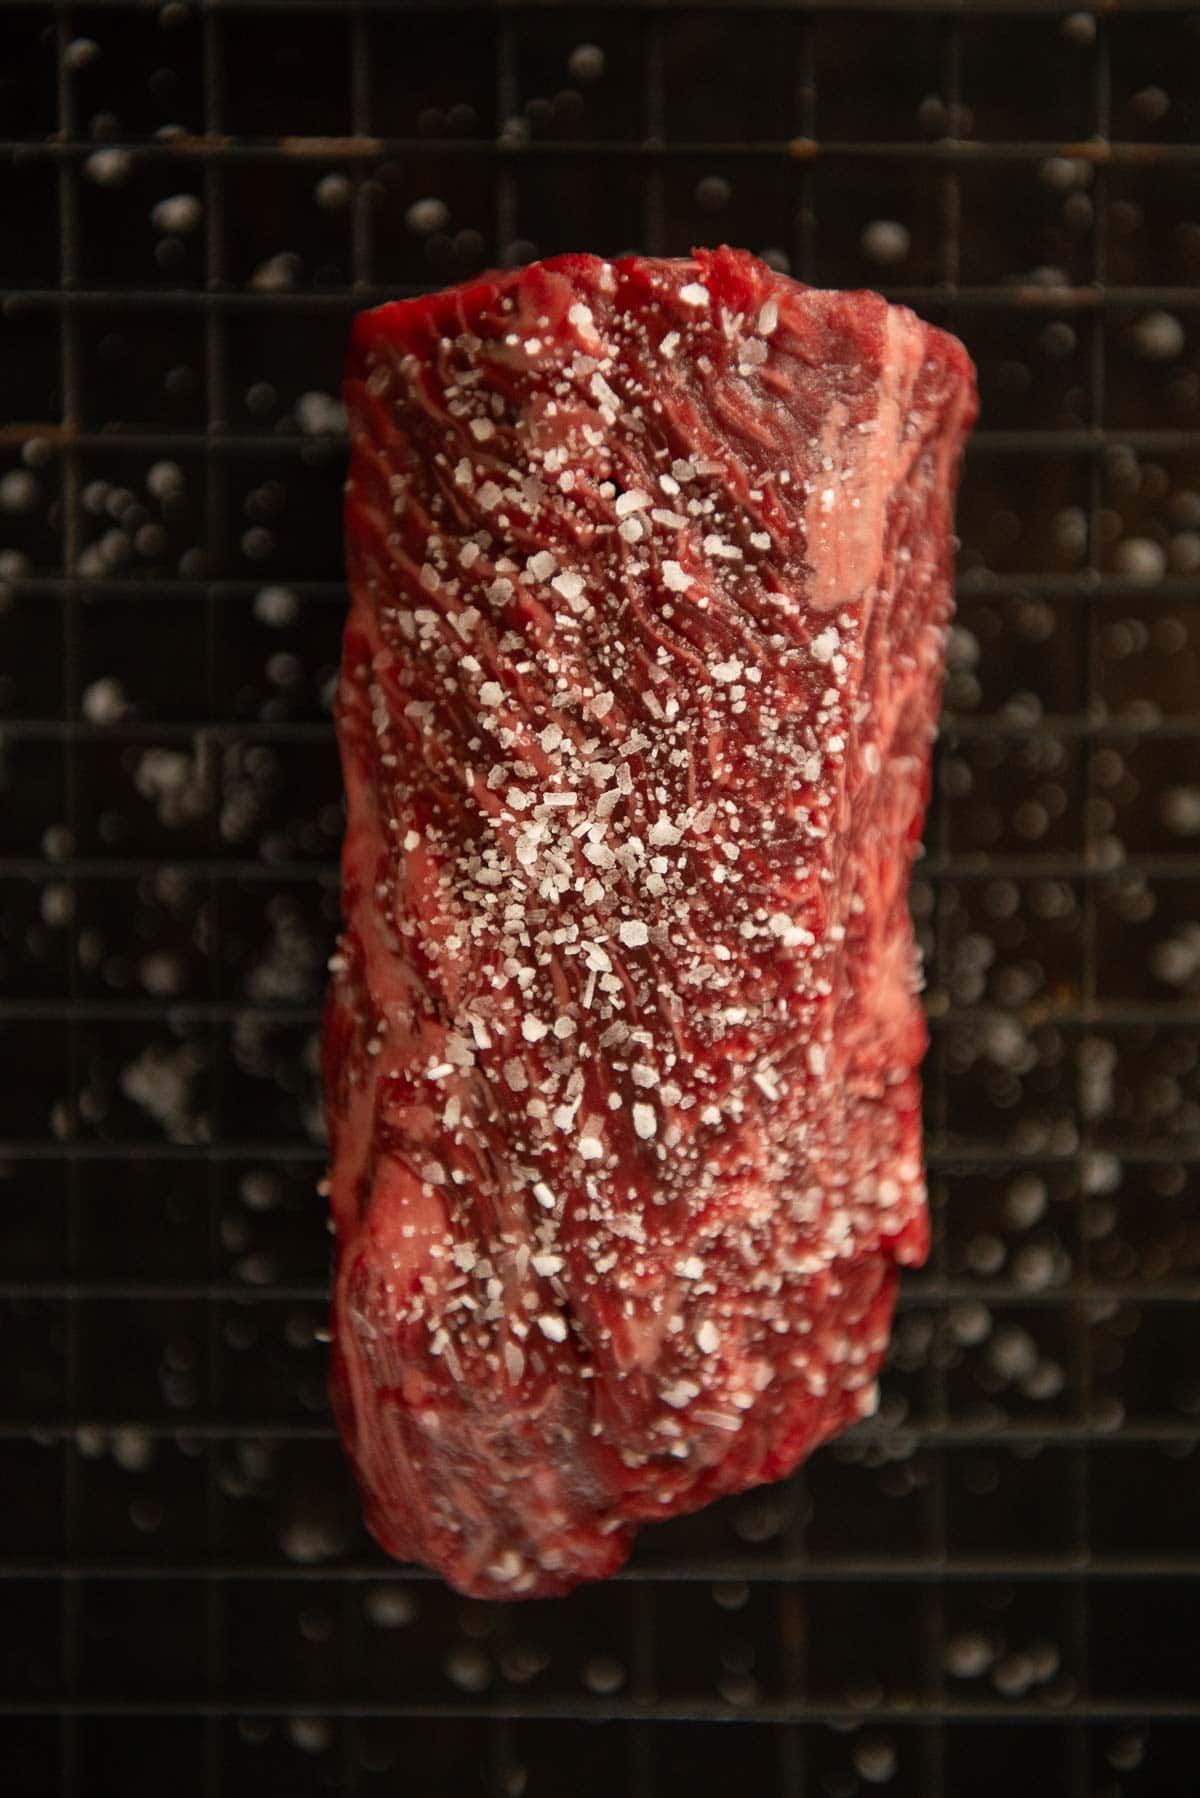 A piece of steak with salt on it.